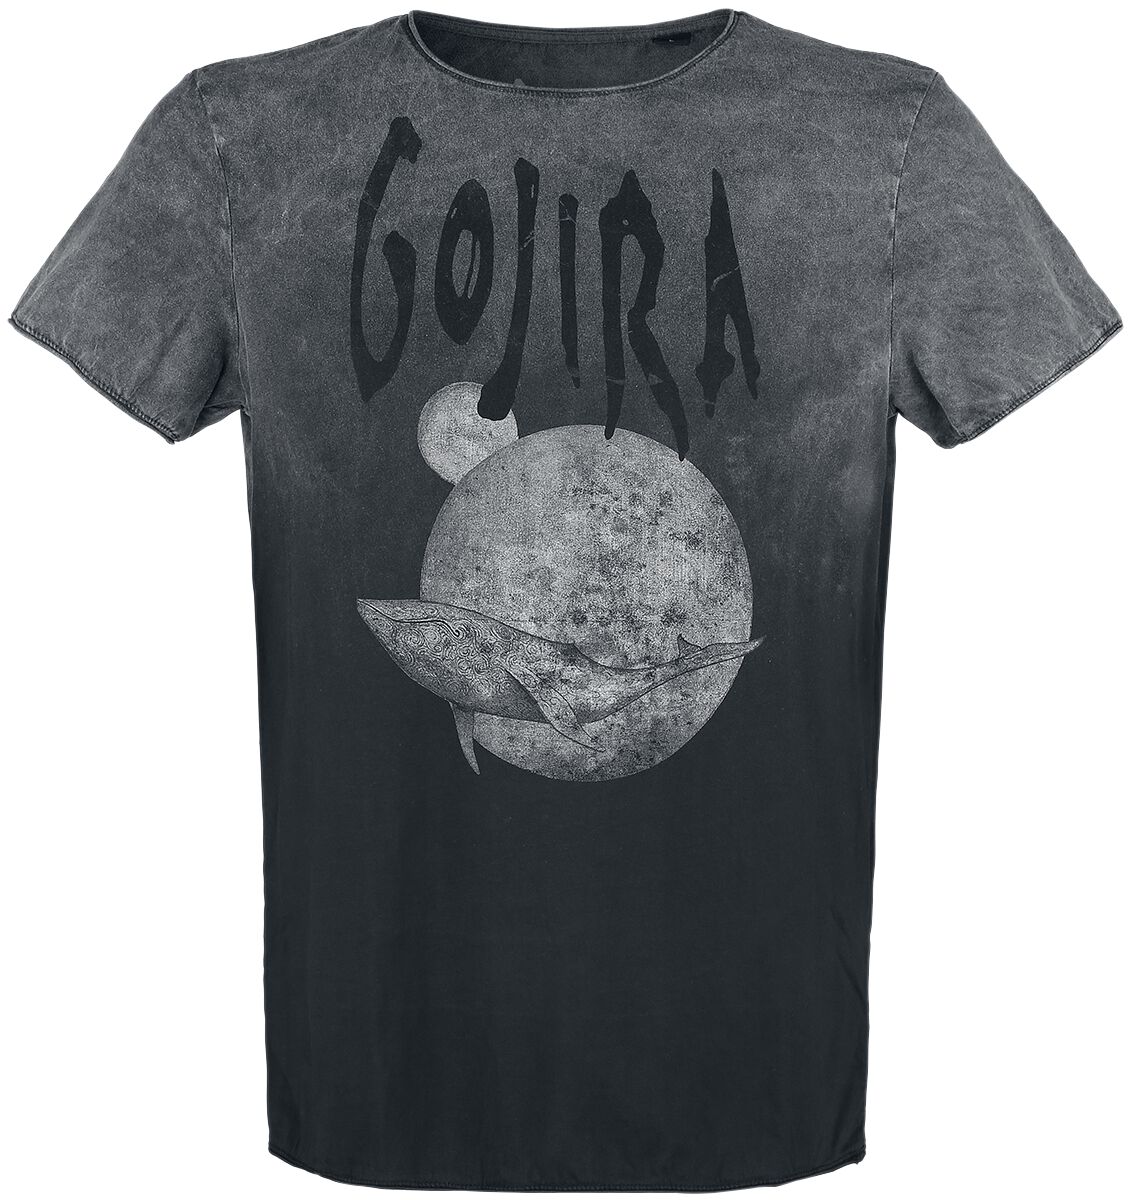 Gojira From Mars Reprise T-Shirt dunkelgrau grau in XL von Gojira